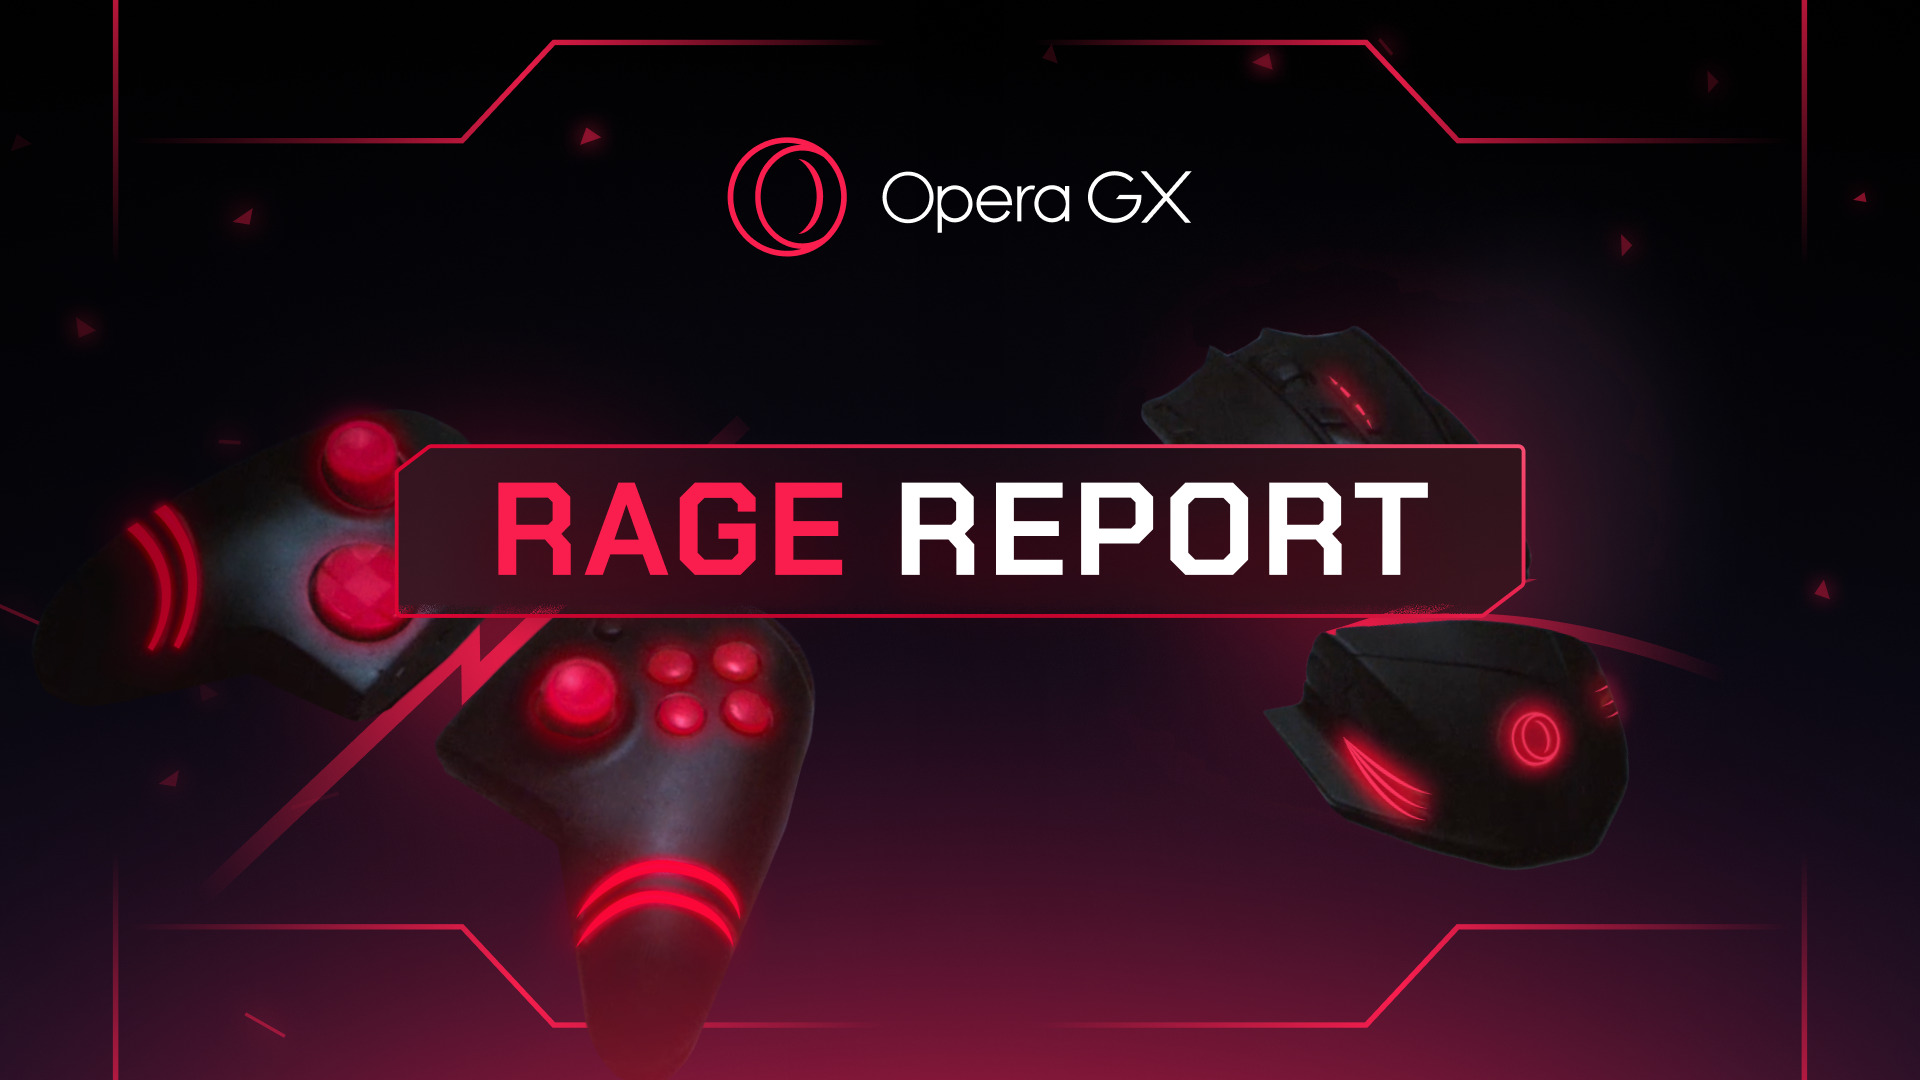 Opera GX rage report main image